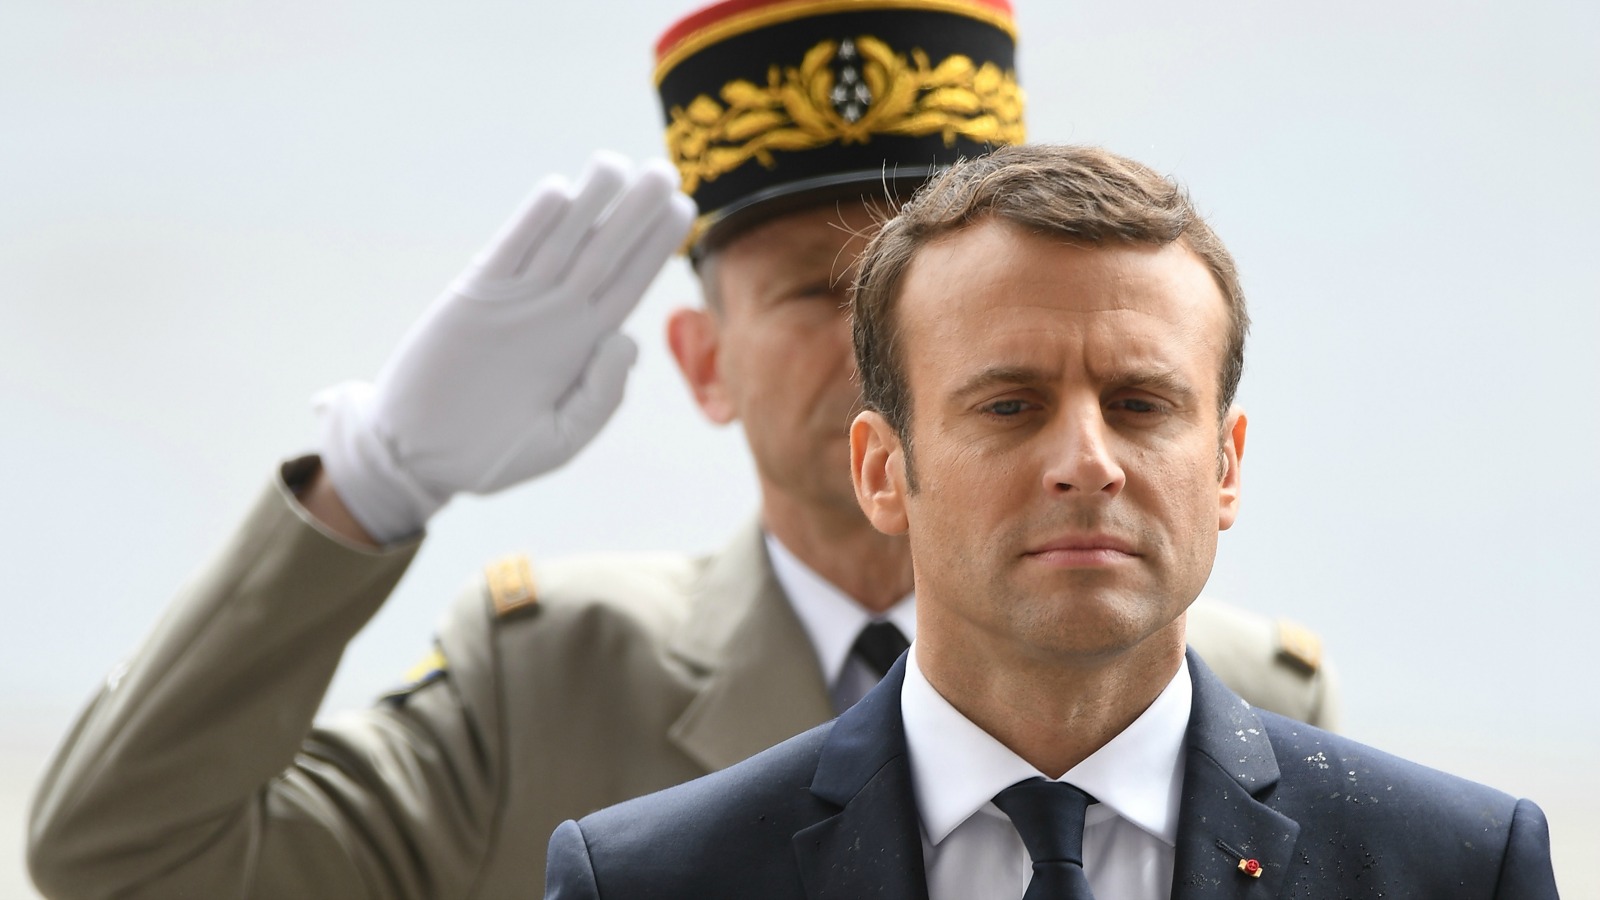 “Iστορικό γεγονός” στη Γαλλία: Παραιτήθηκε ο αρχηγός των ενόπλων δυνάμεων μετά την κόντρα με τον Μακρόν